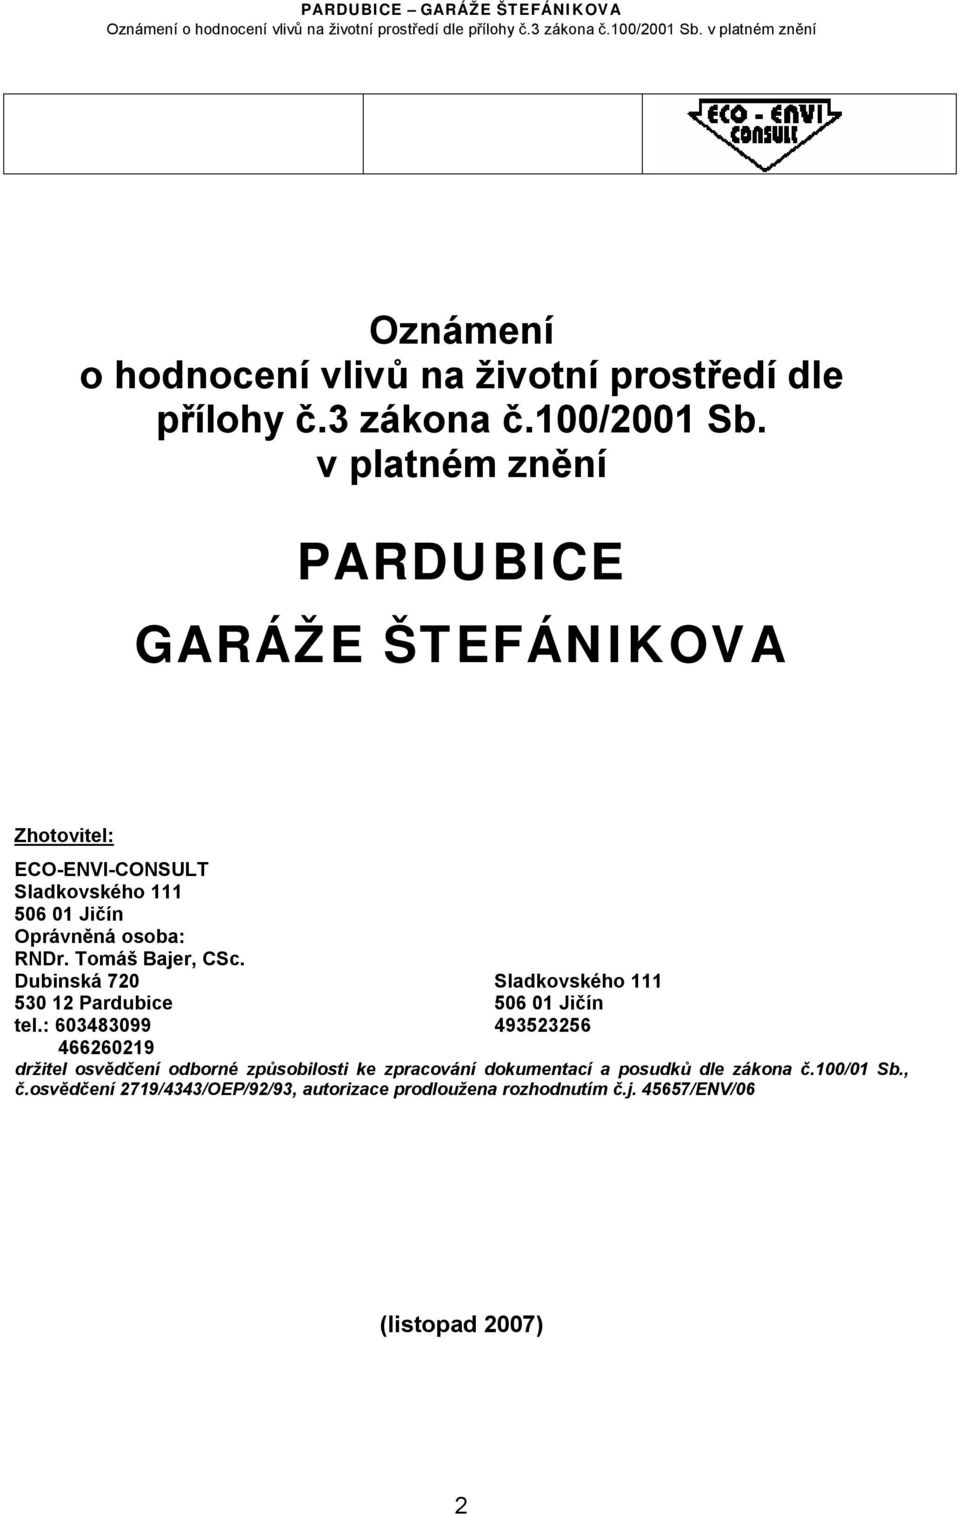 Tomáš Bajer, CSc. Dubinská 720 Sladkovského 111 530 12 Pardubice 506 01 Jičín tel.